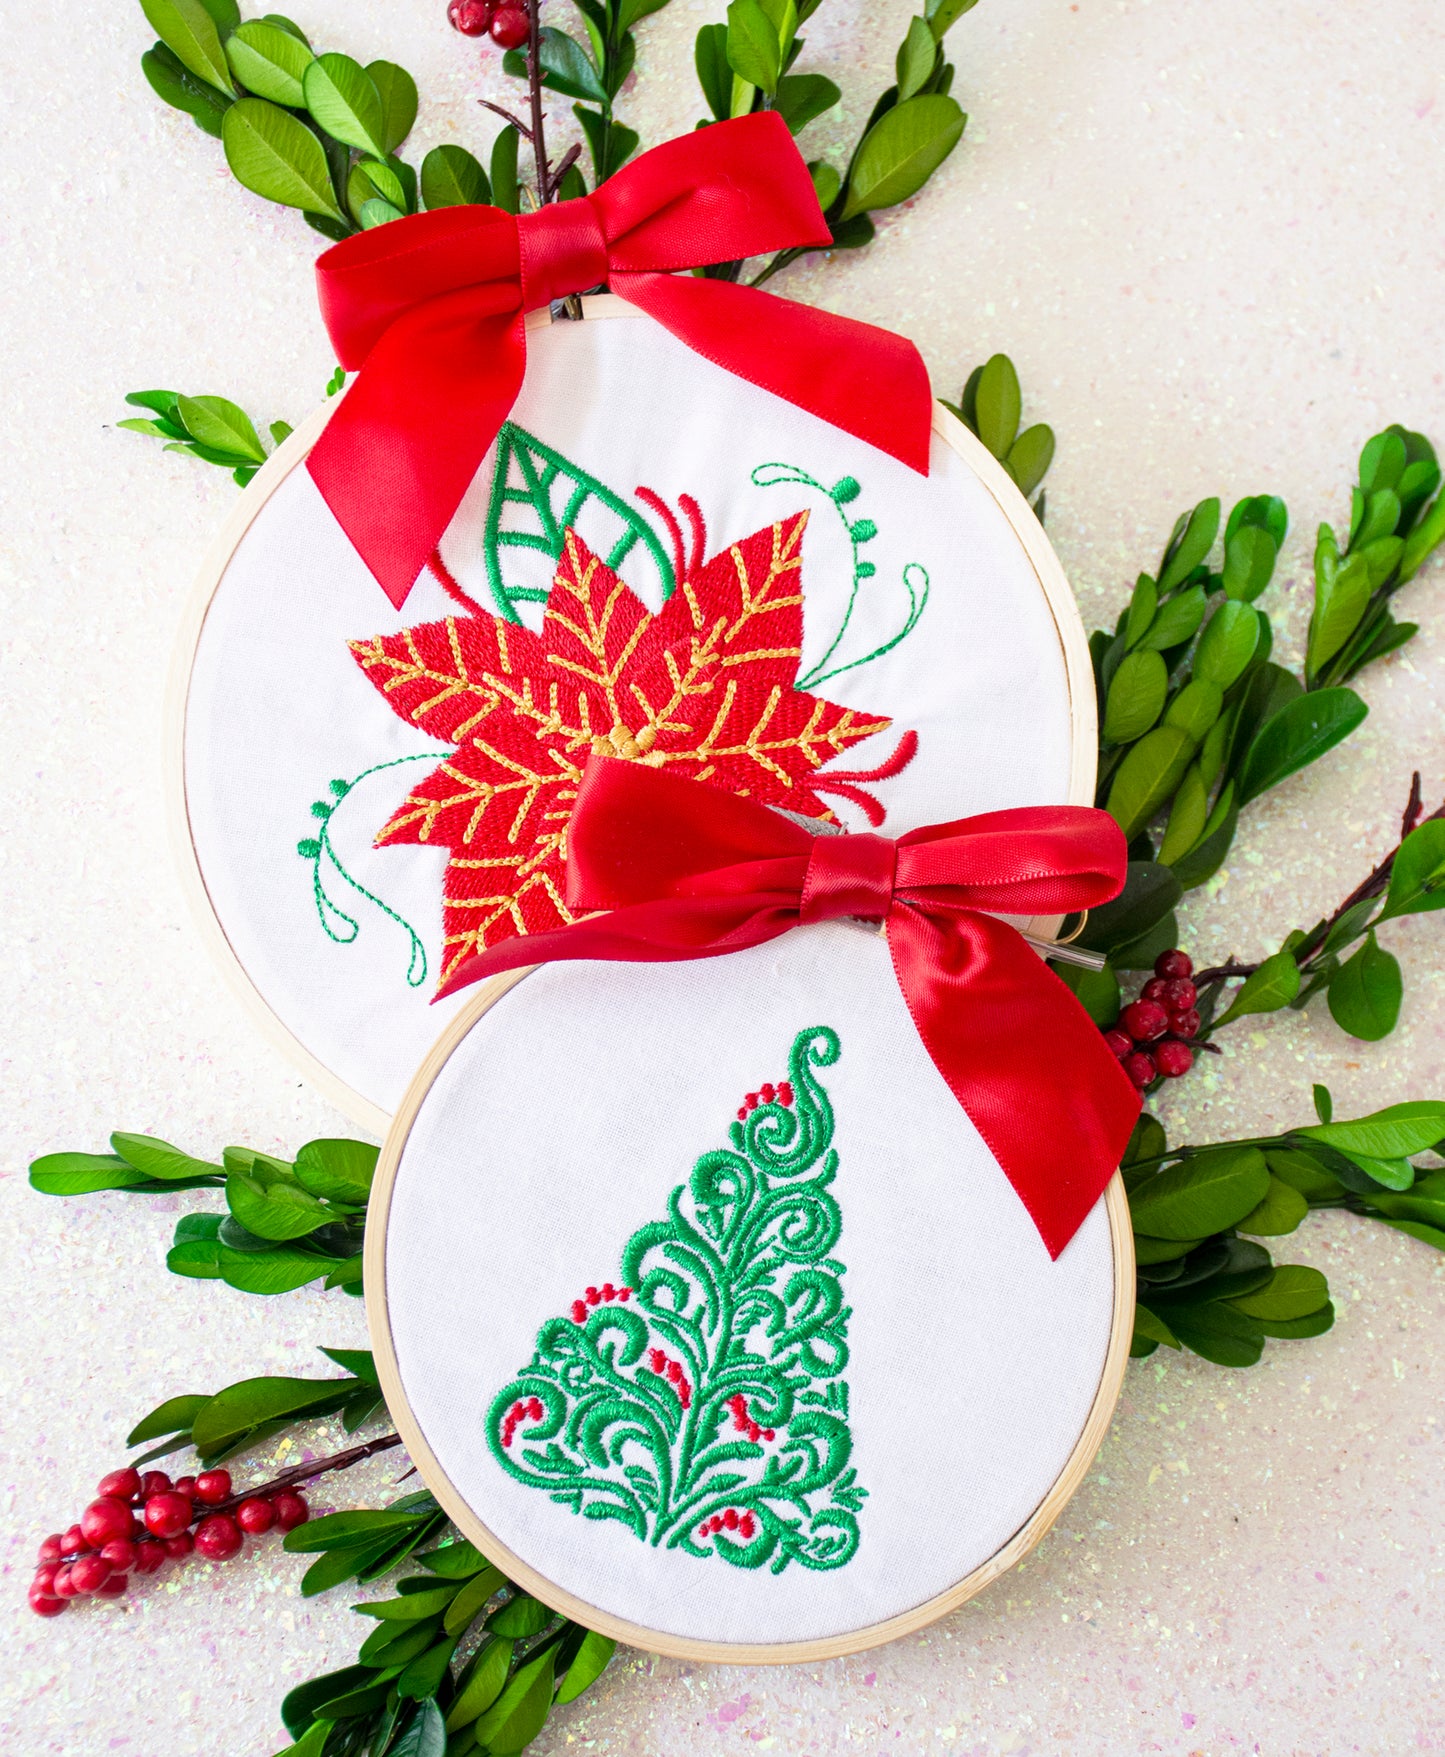 Ornament - Christmas Tree Swirl